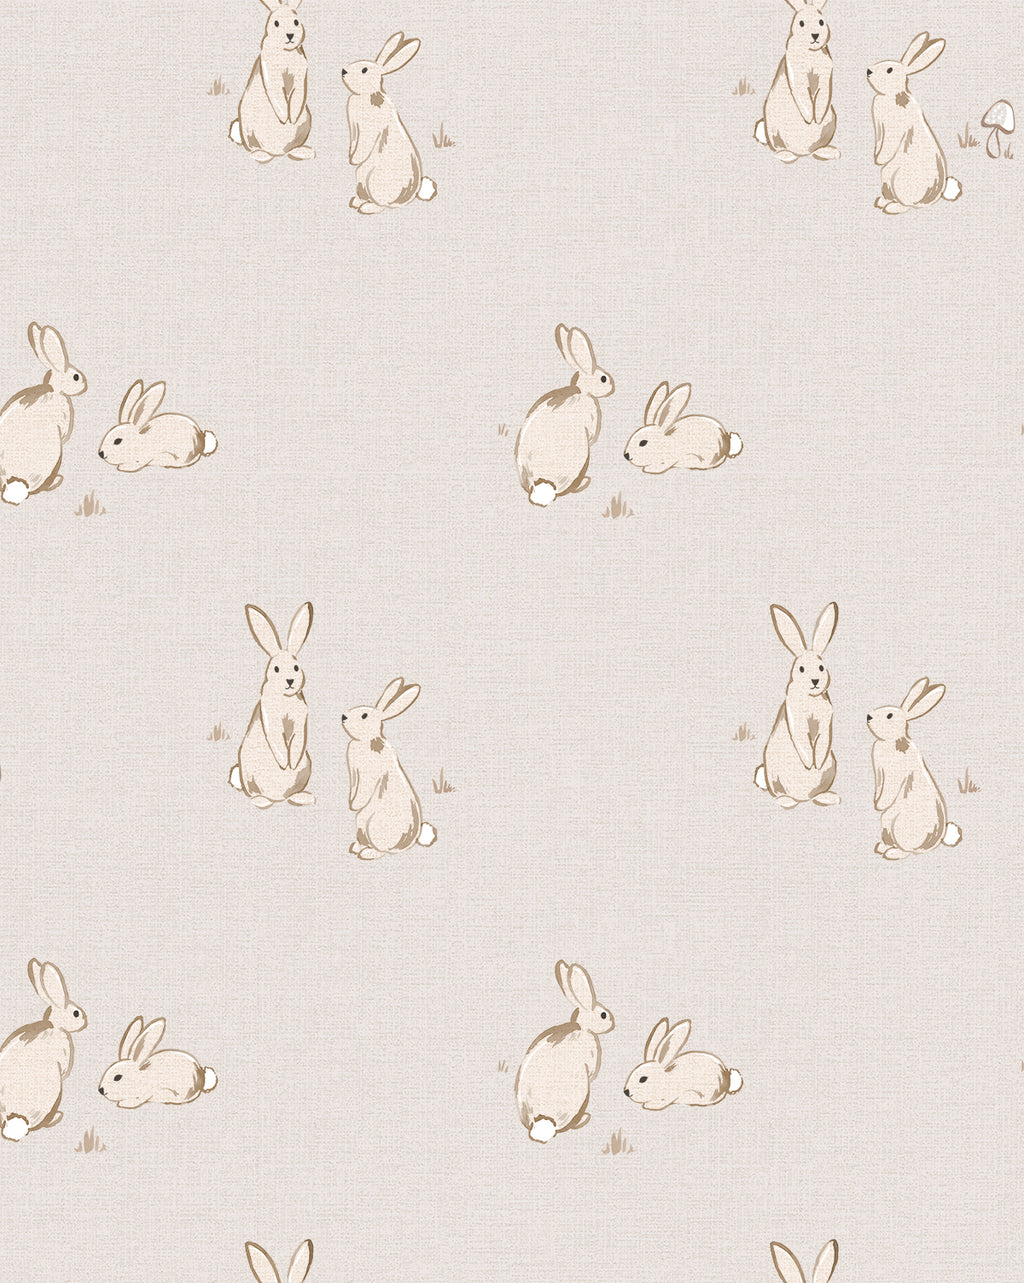 ∩⑅∩ bunny wallpaper 🐇 | Rabbit wallpaper, Cute baby bunnies, Bunny  wallpaper